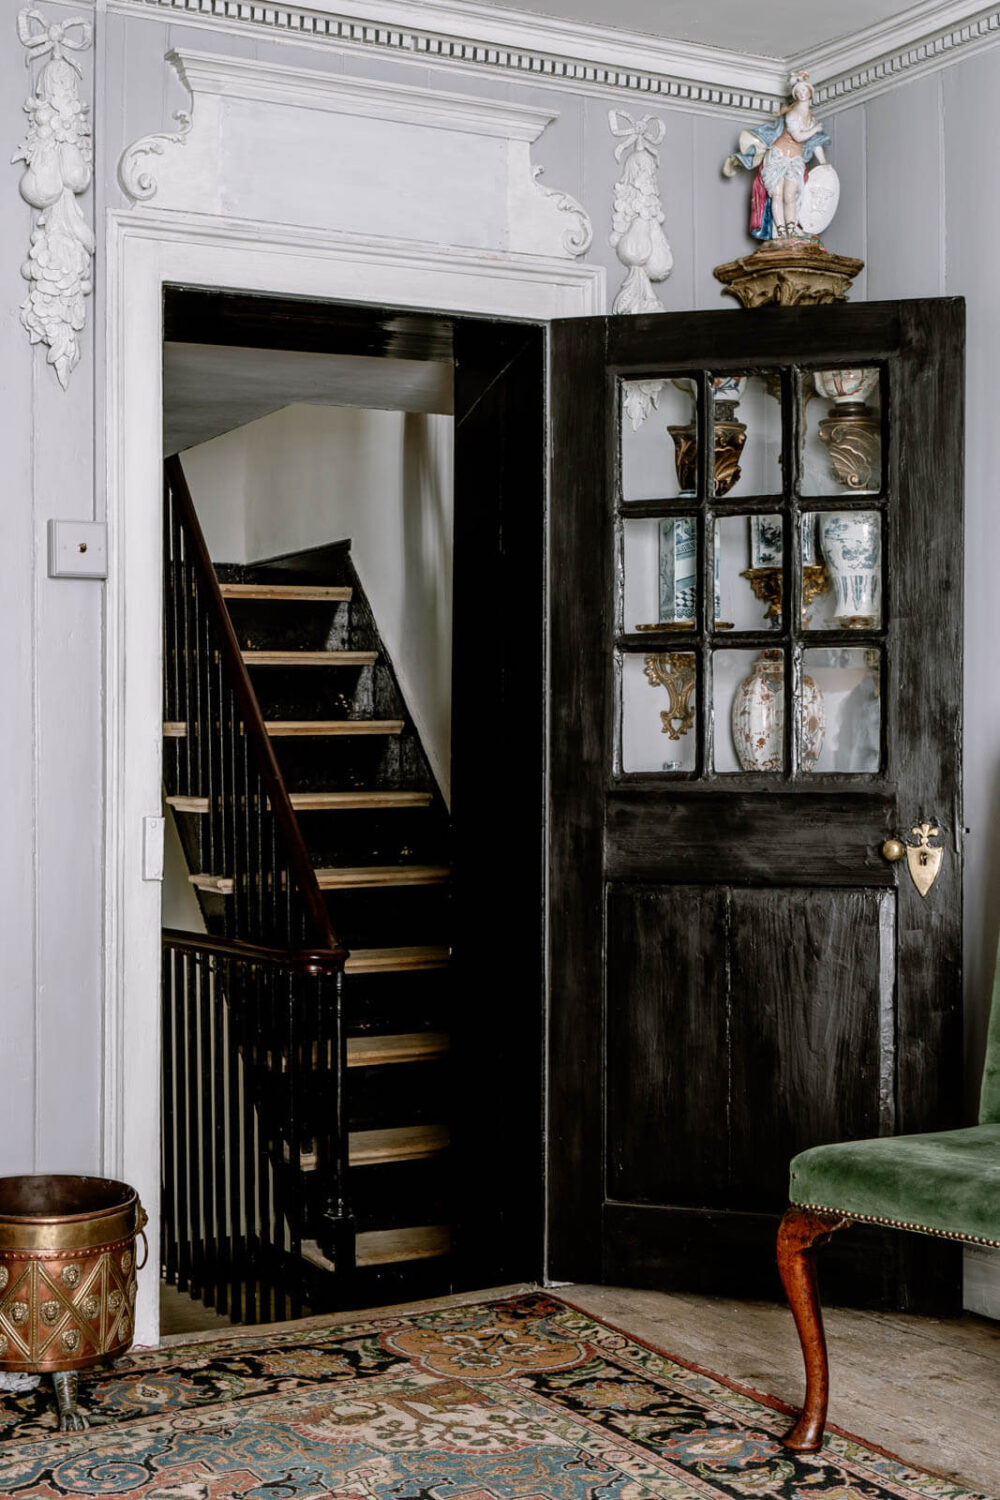 wooden-door-staircase-historic-house-nordroom